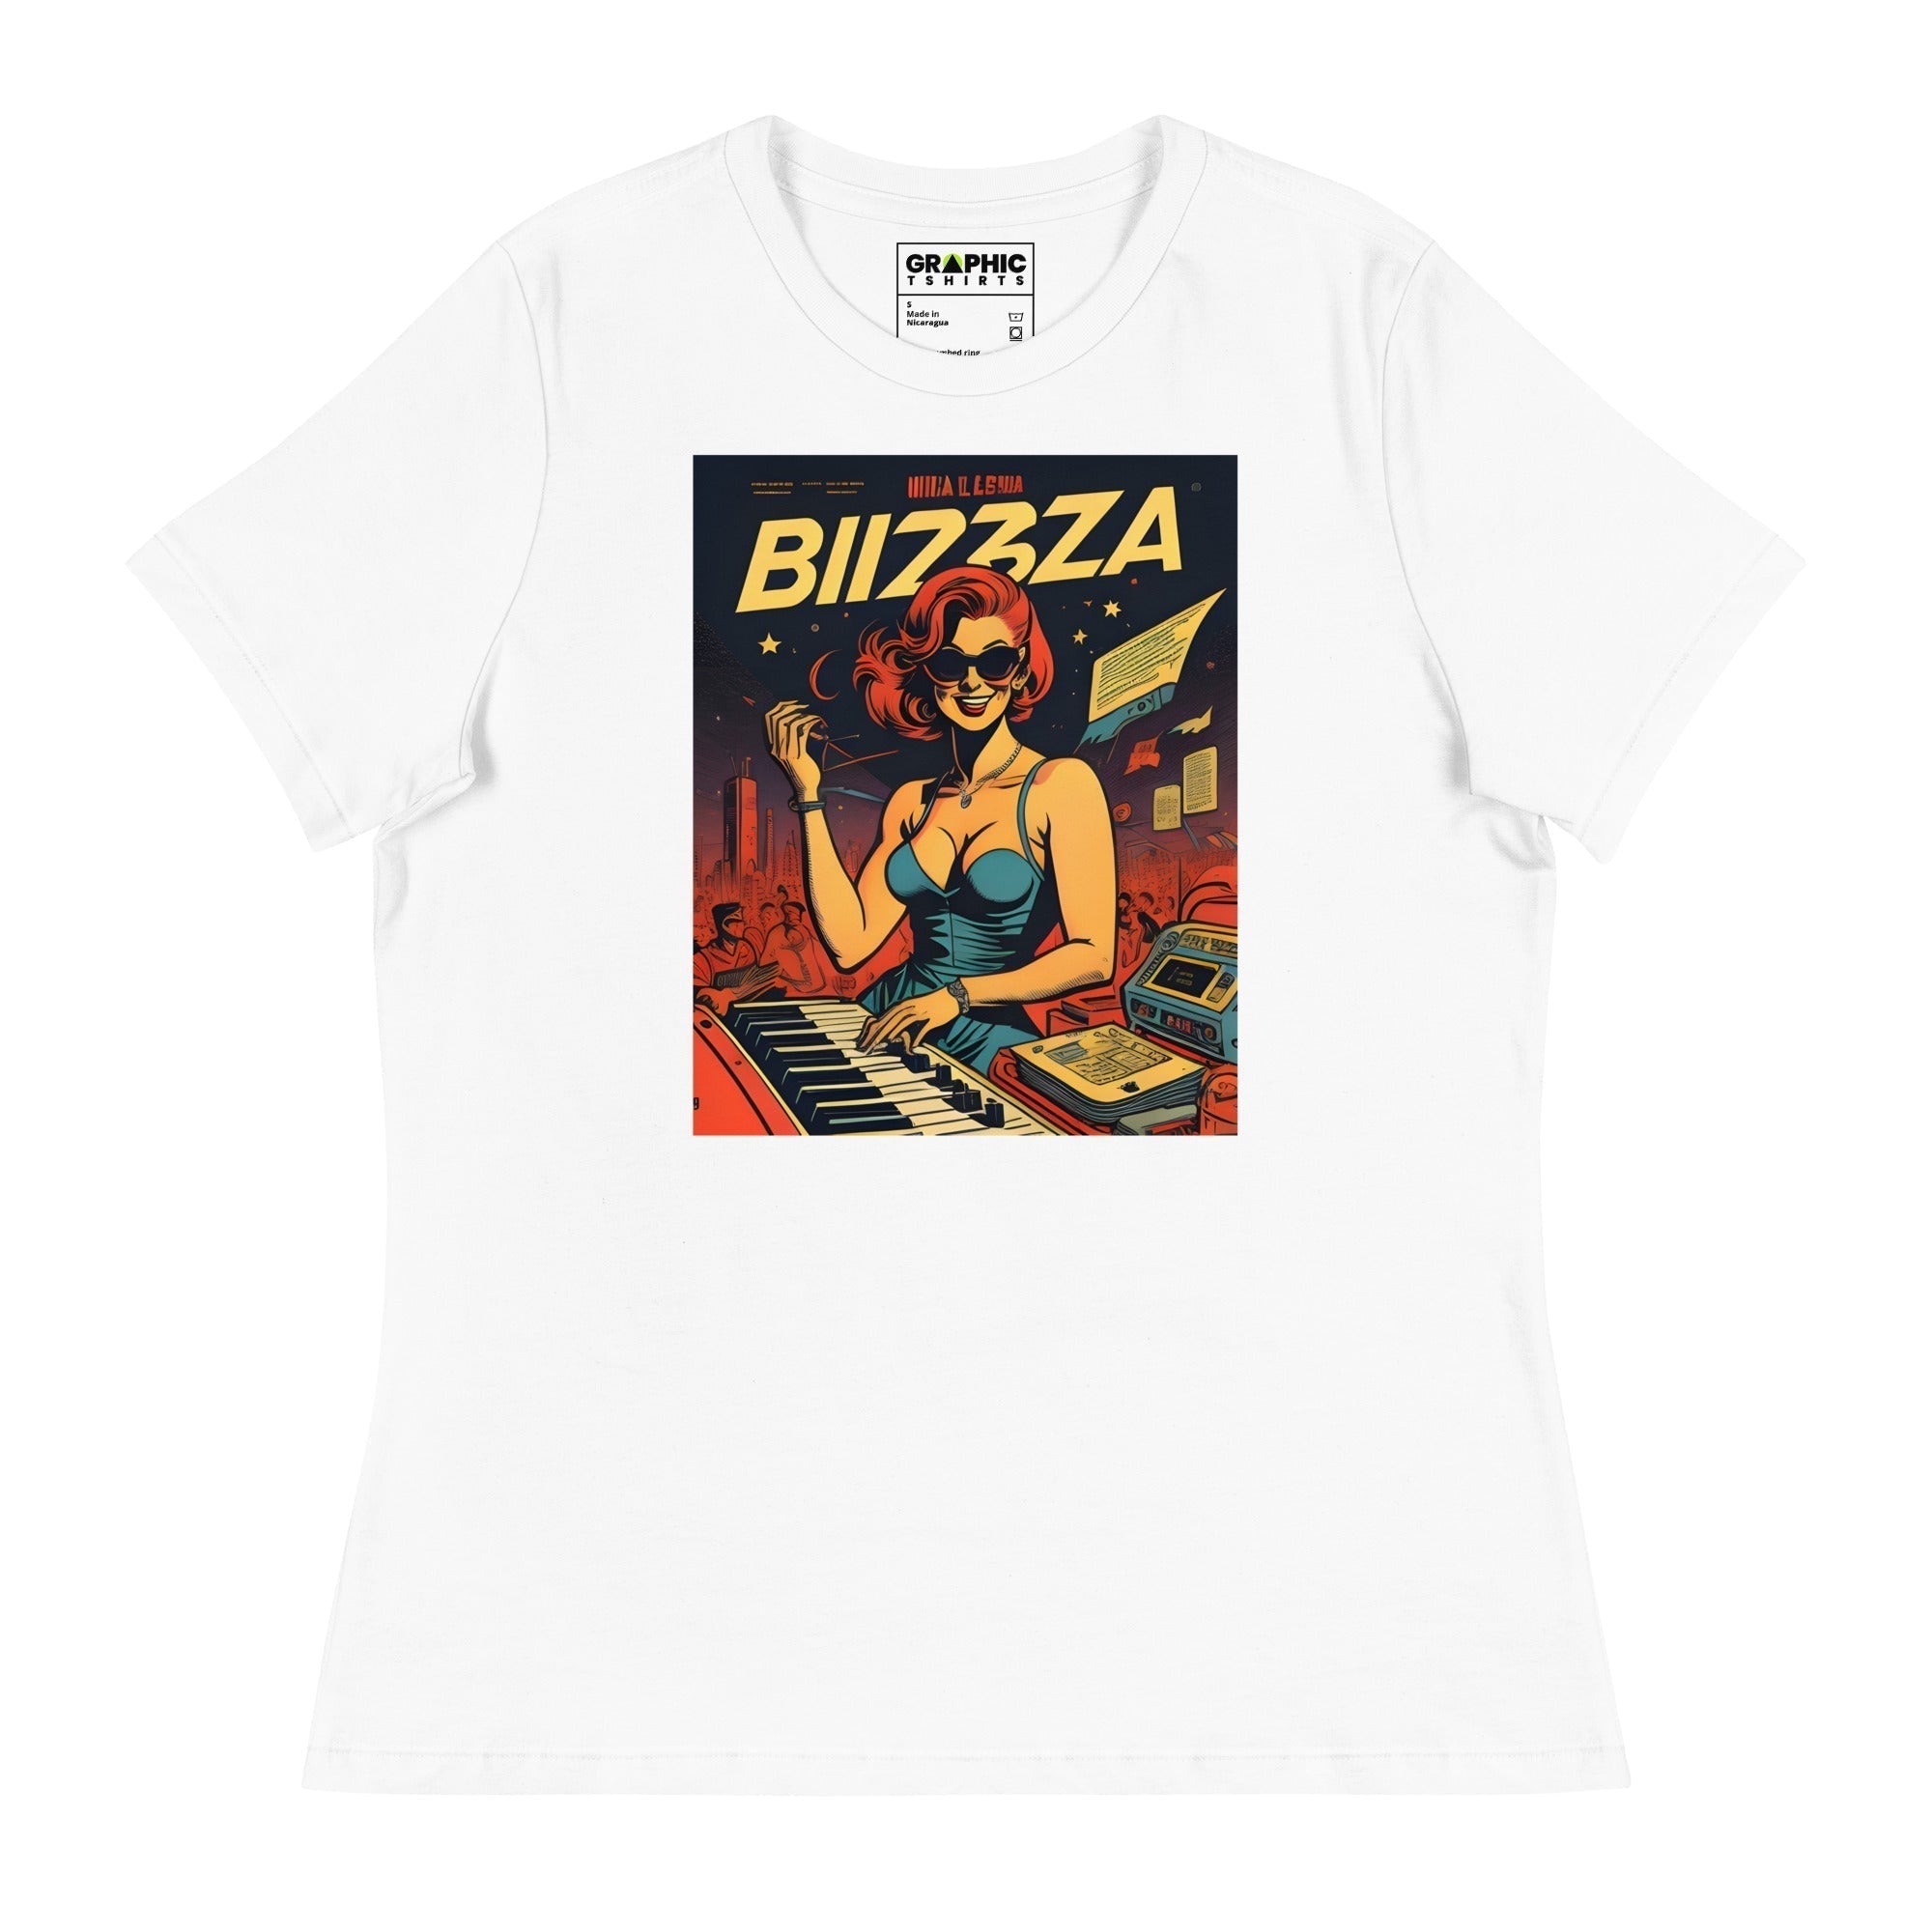 Women's Relaxed T-Shirt - Ibiza Night Club Heroes Comic Series v.25 - GRAPHIC T-SHIRTS